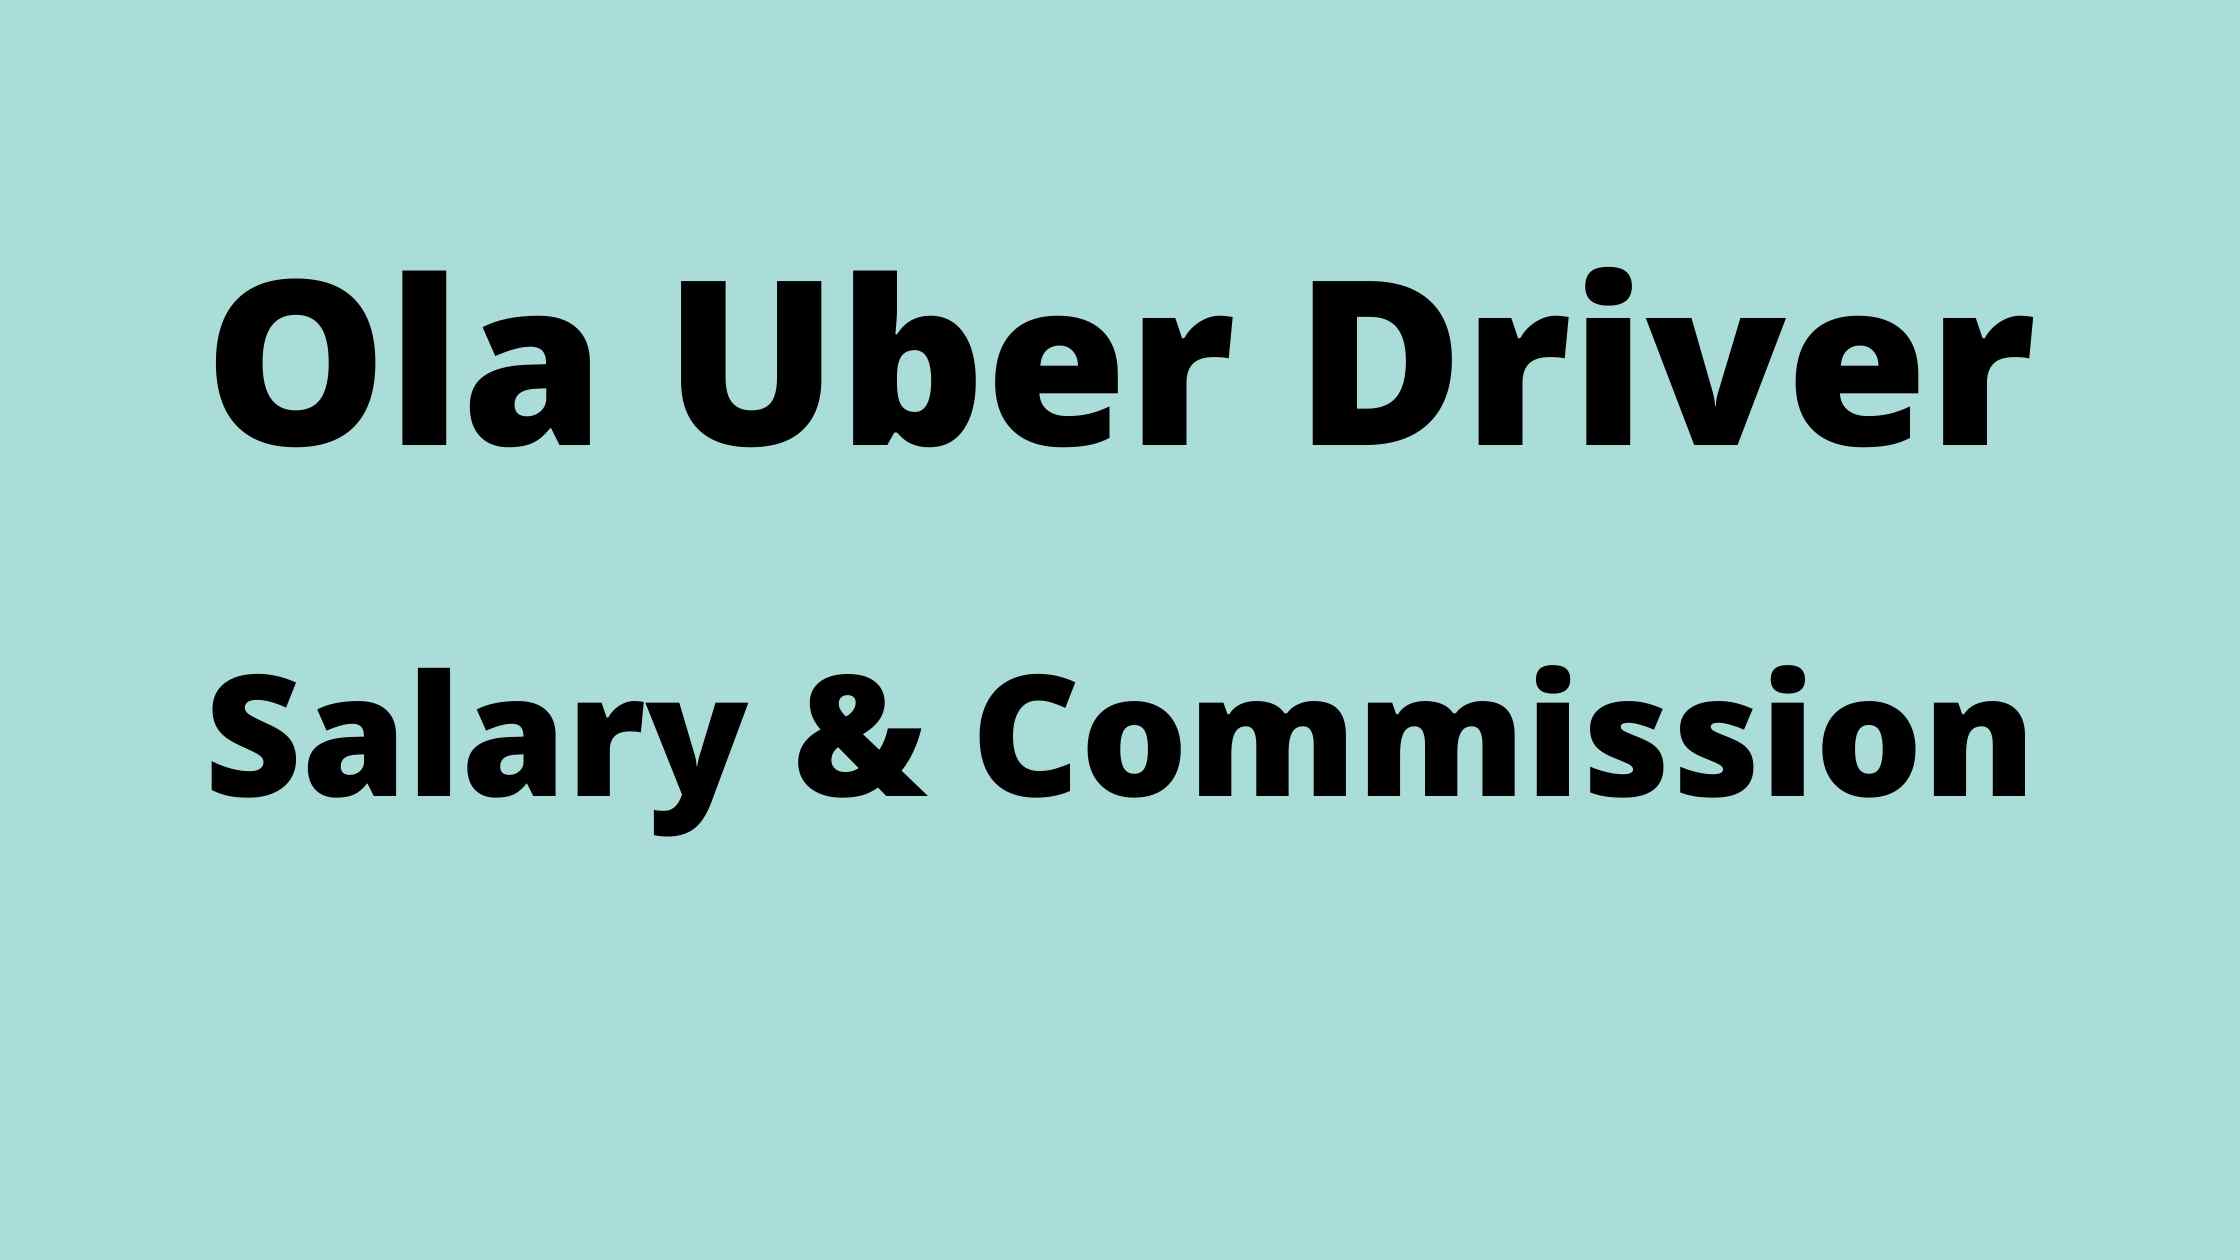 ola, uber driver salary commission